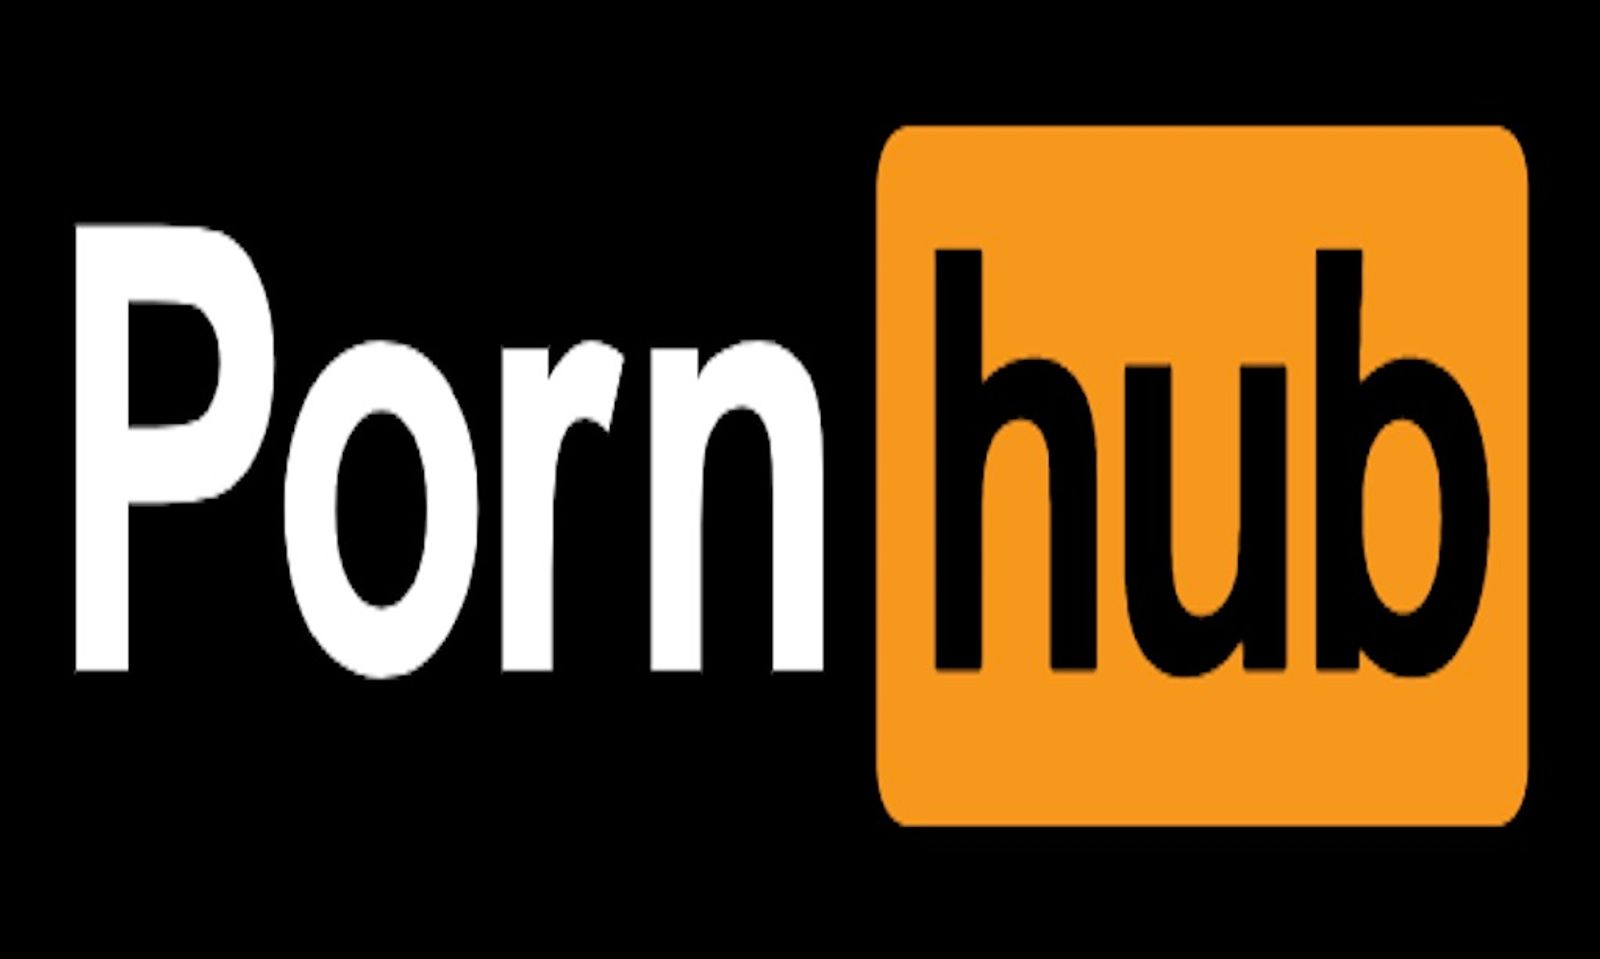 Pornhub Posts Response to Change.org Petition to Shut Site Down